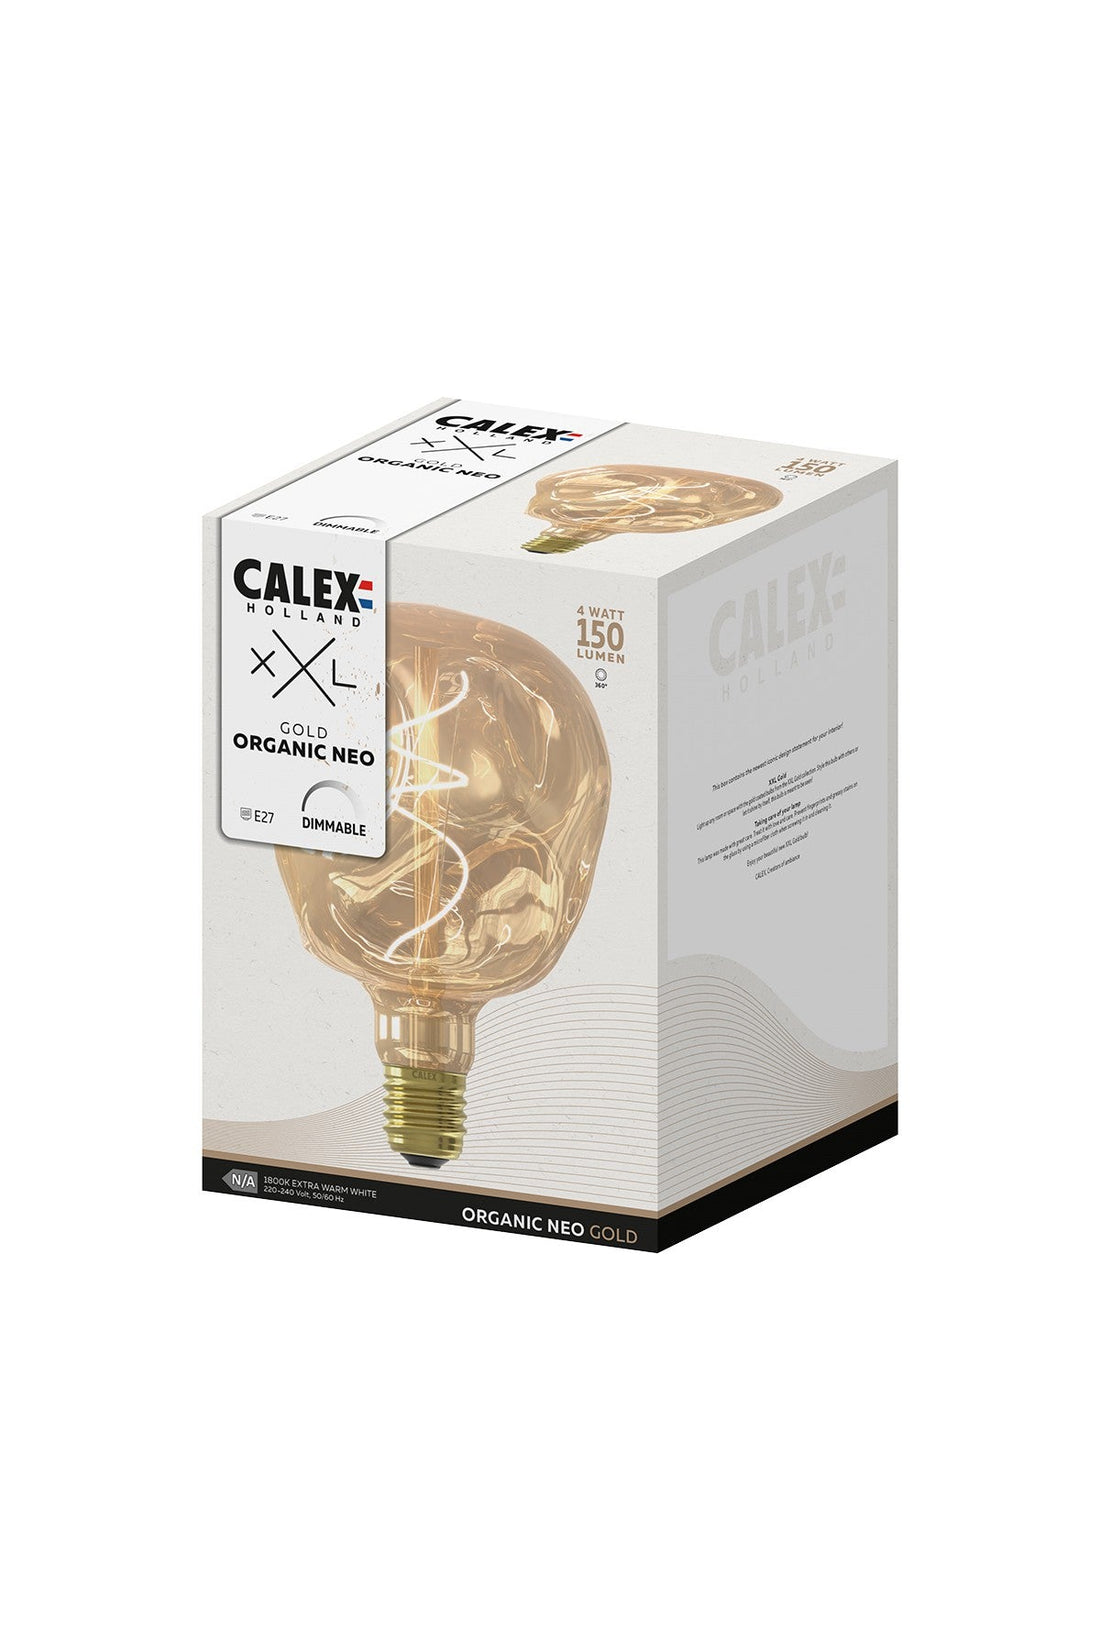 XXL Organic Neo Champagne LED - Calex